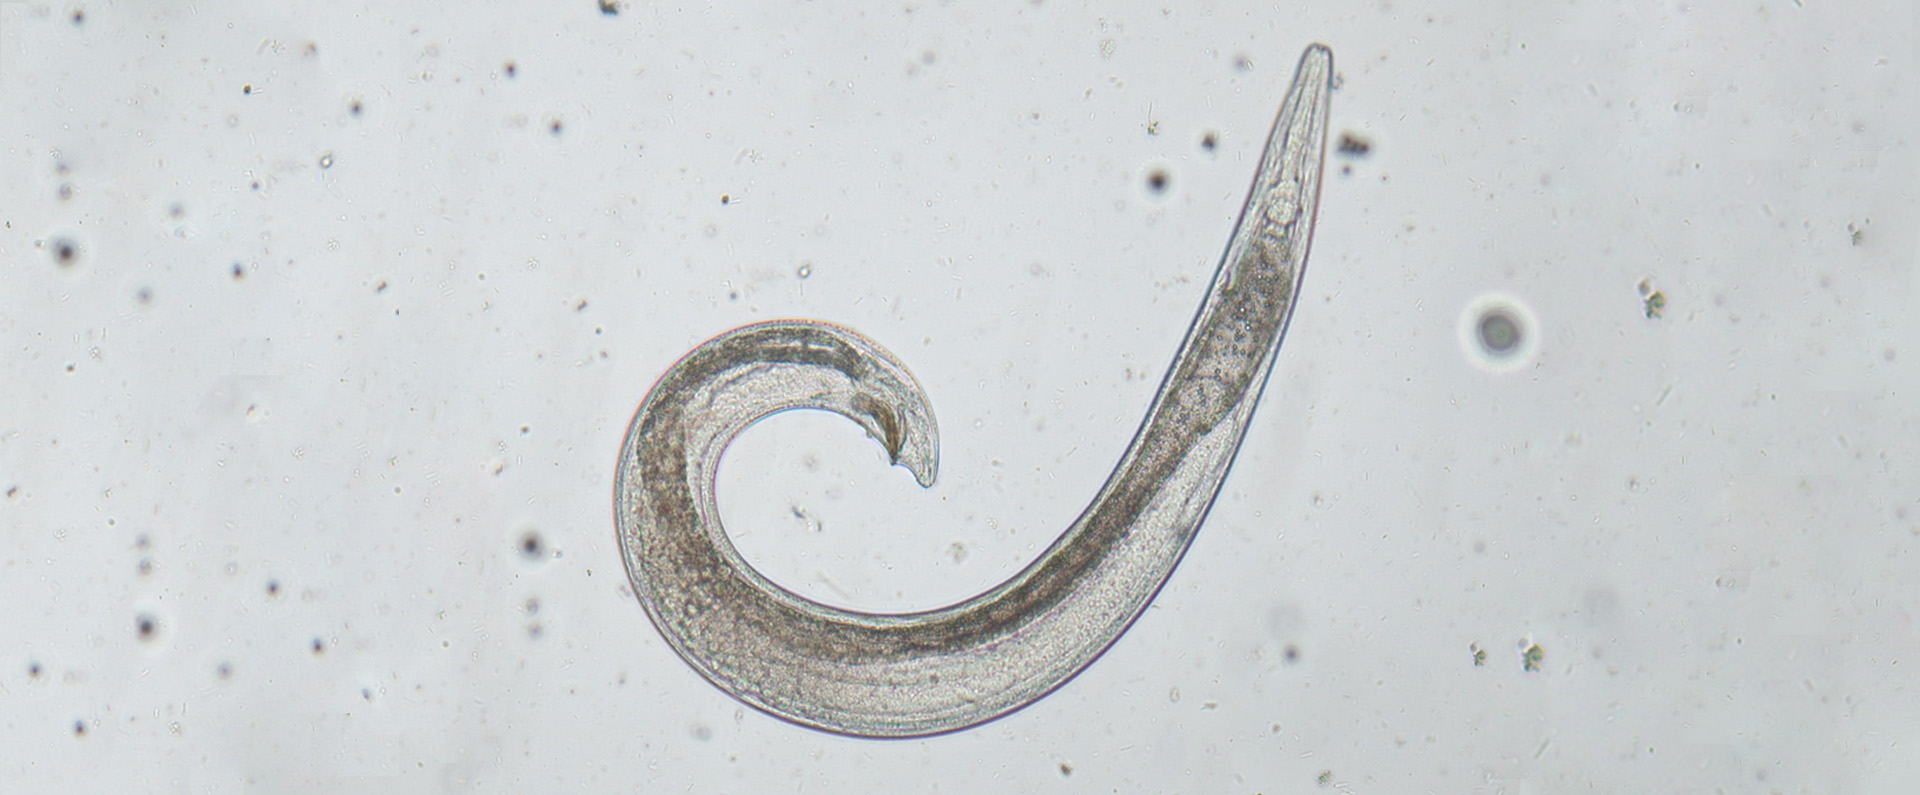 A male Steinernema feltiae nematode.